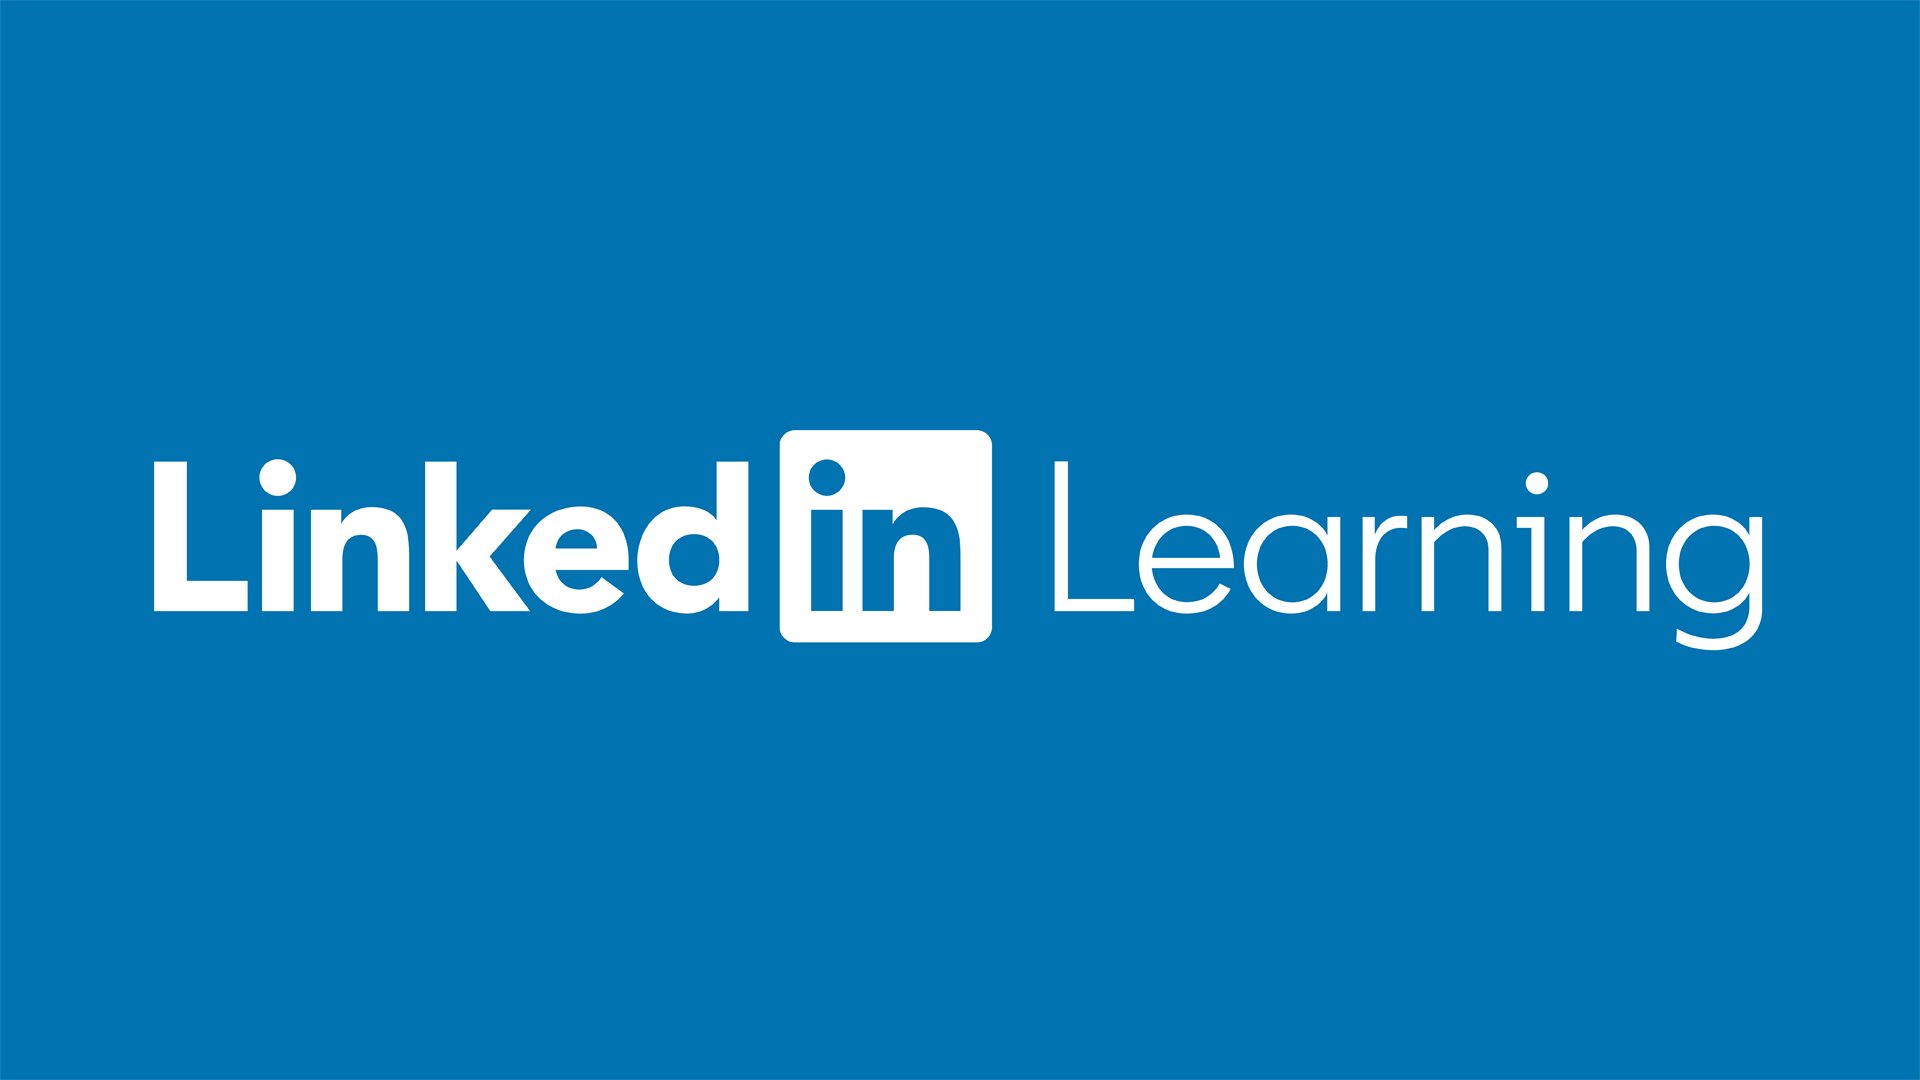 Linkedin Learning training platform